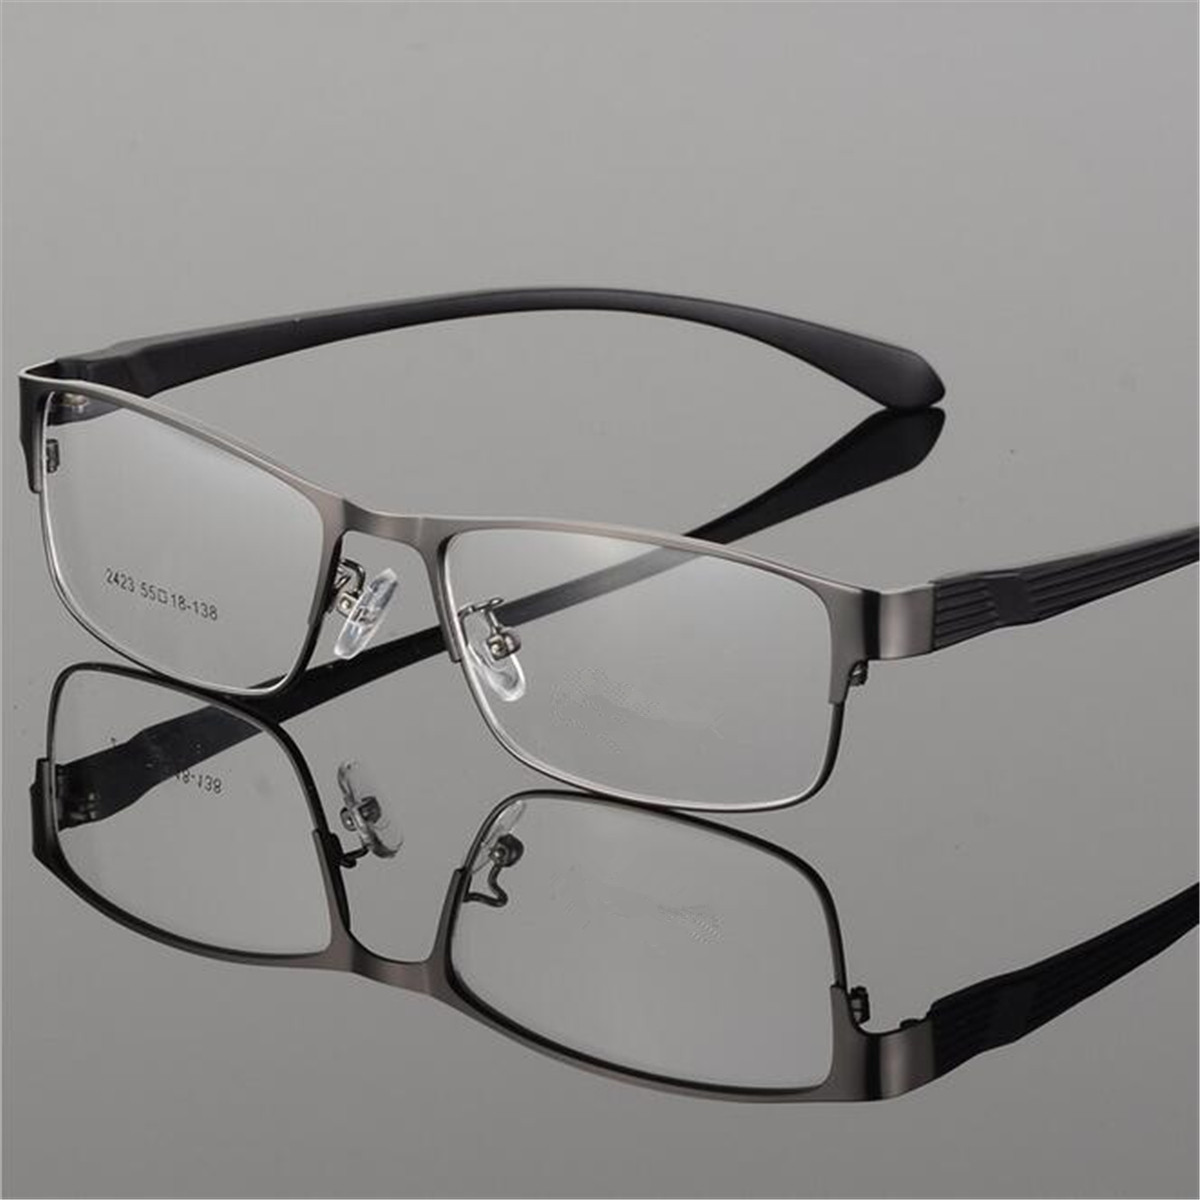 Fashionable light slim eye glasses frame metal full rim Sale - Banggood.com